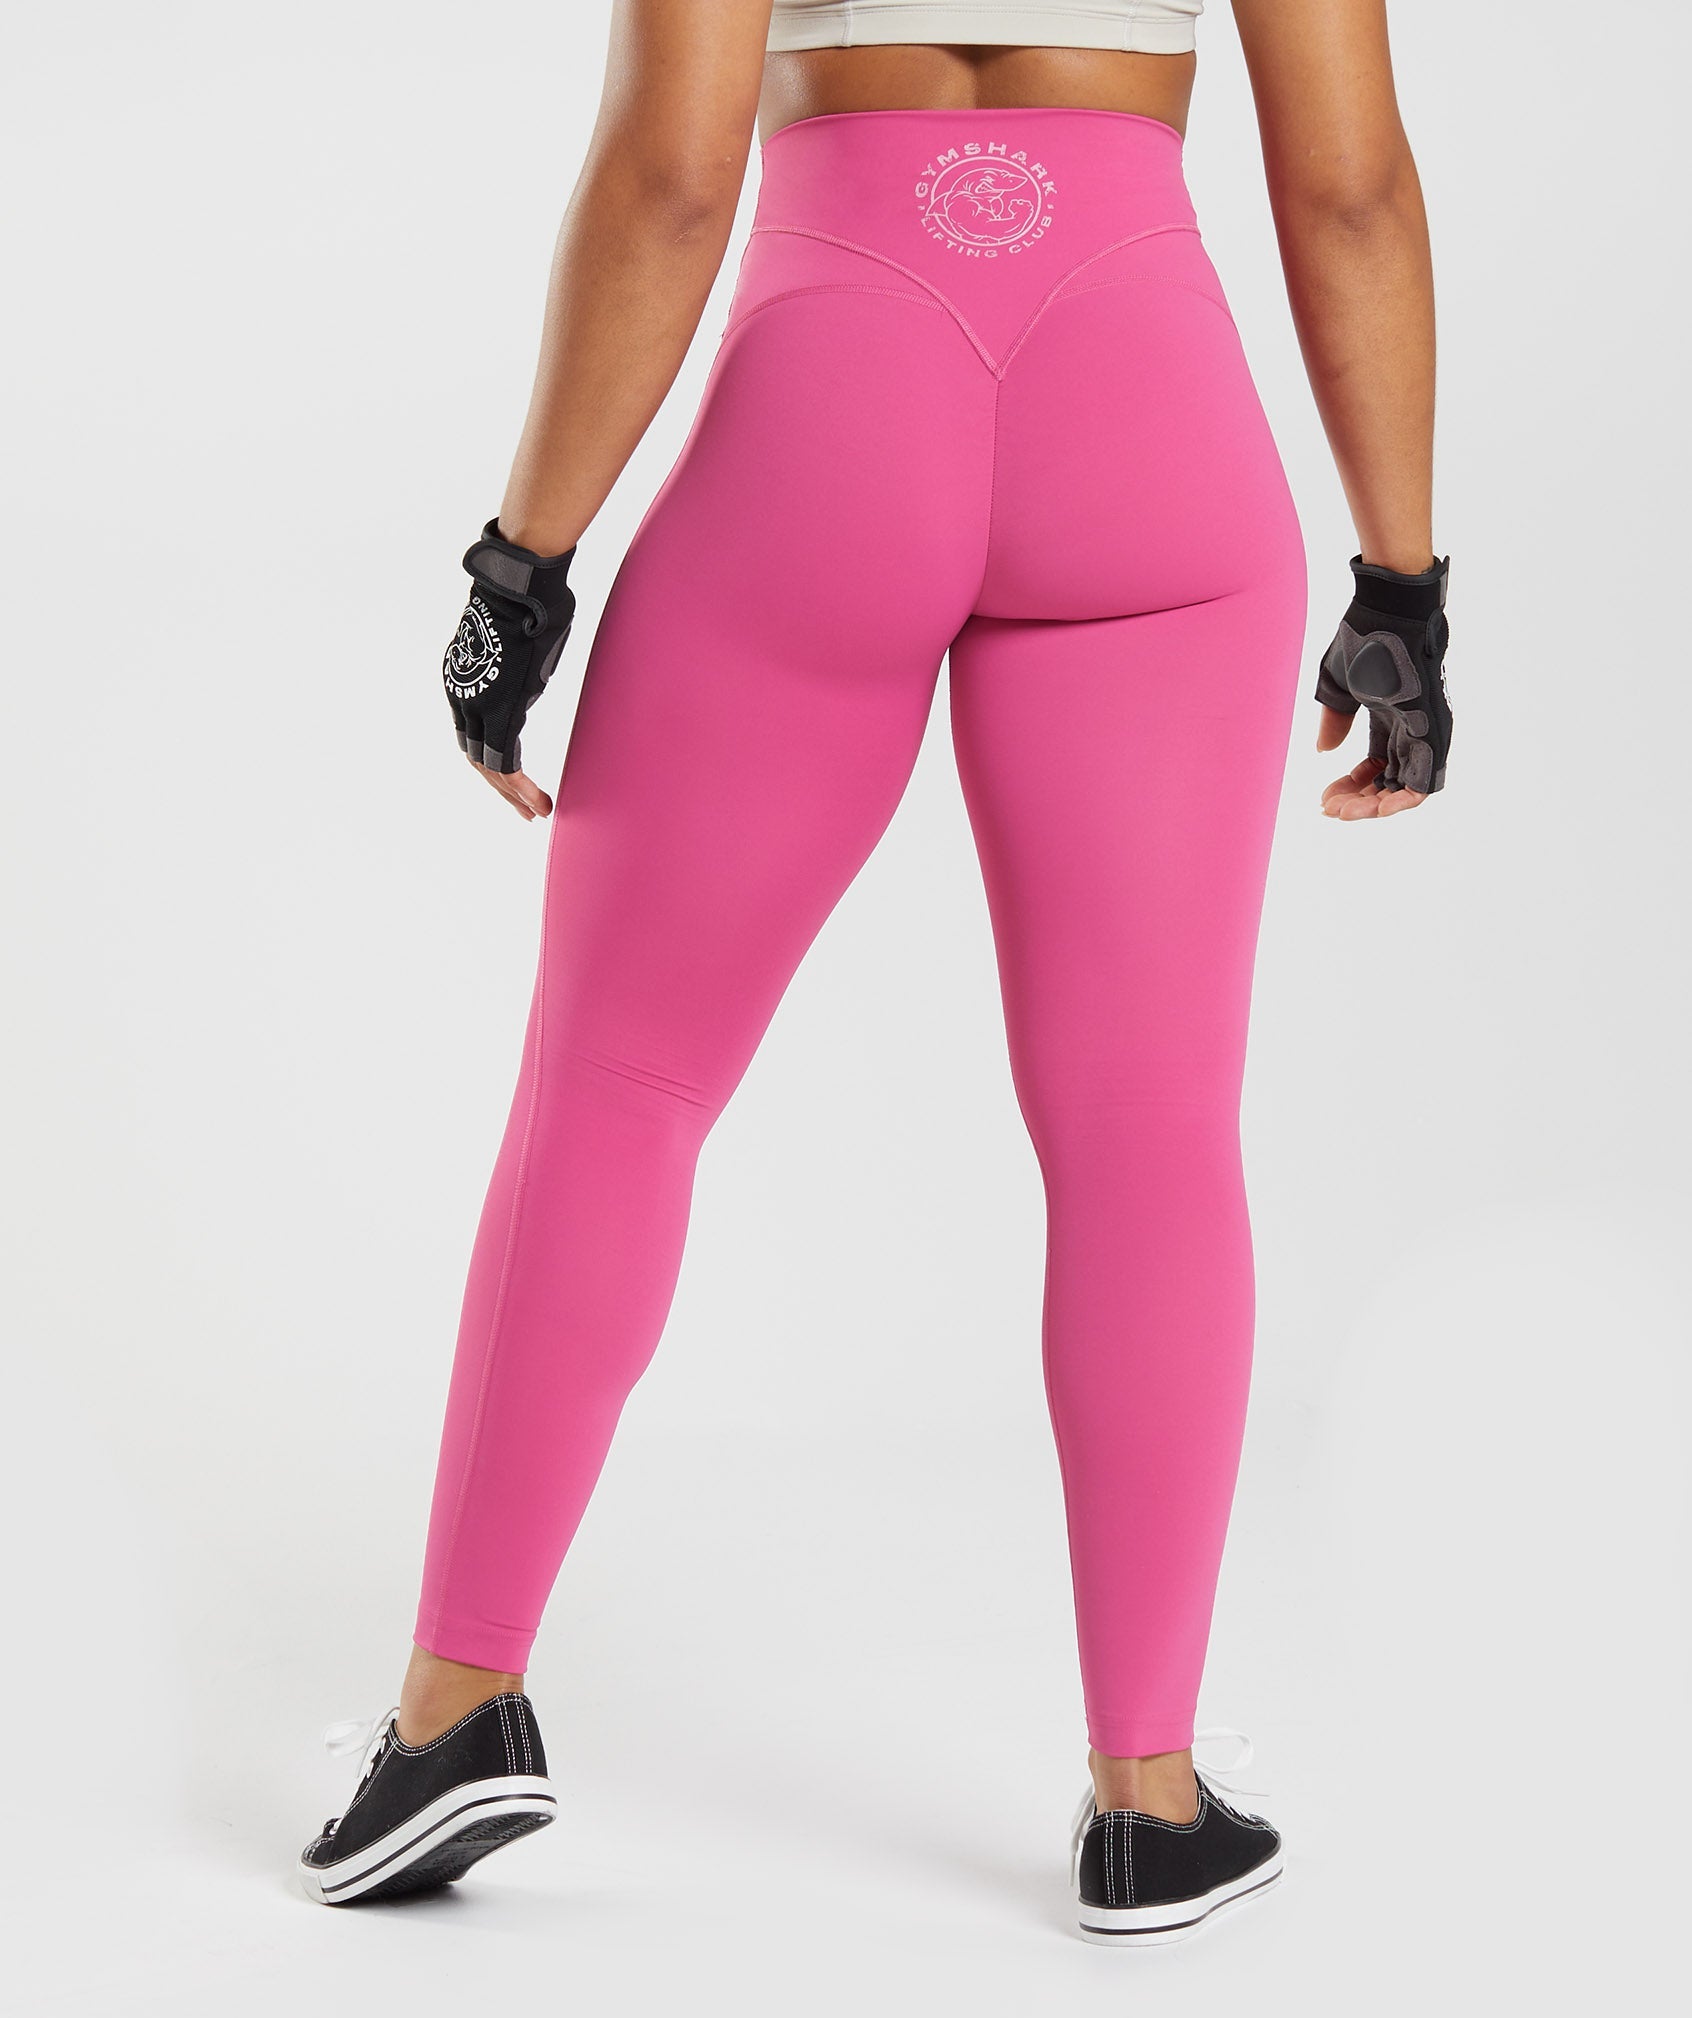 Hurley Women's Sport Block Hybrid Legging, Pink, Medium